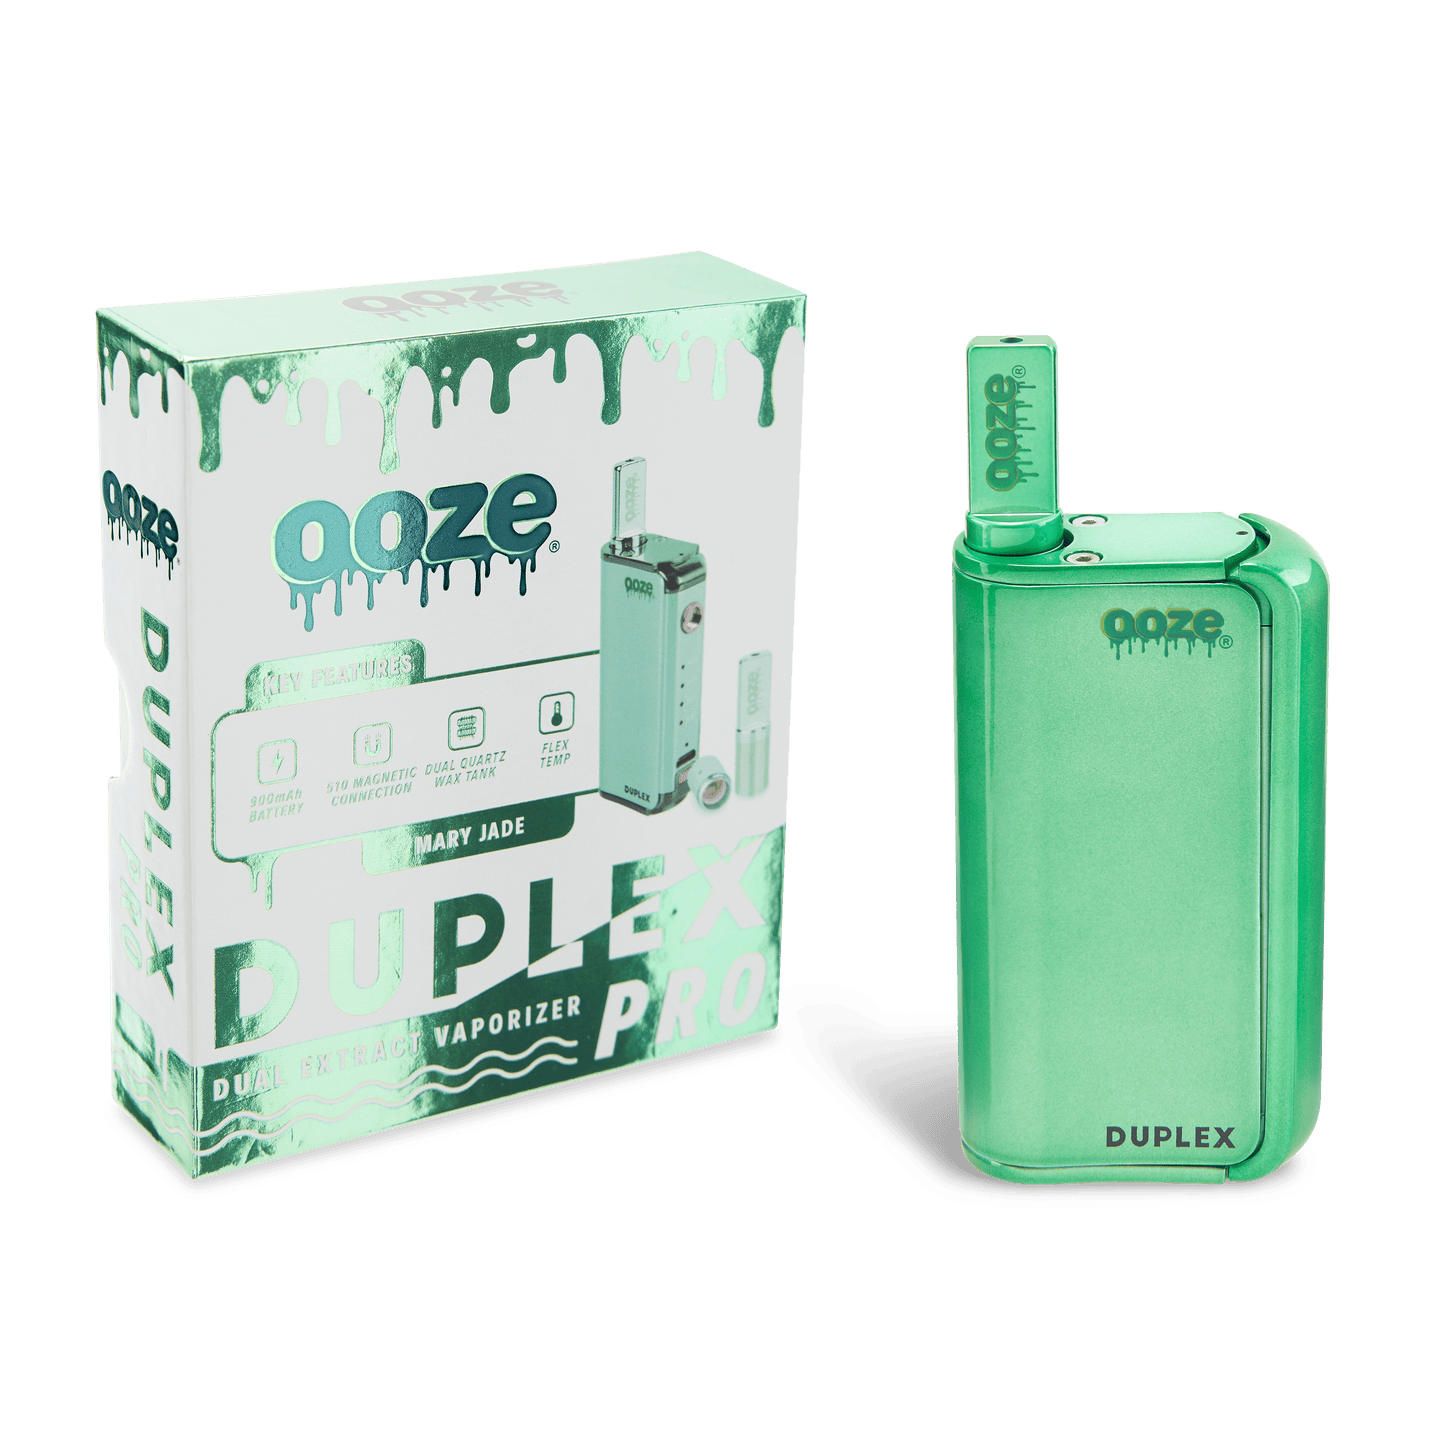 Ooze Batteries and Vapes Mary Jade Ooze Duplex Pro – 900 mAh – Cartridge & Wax Vaporizer